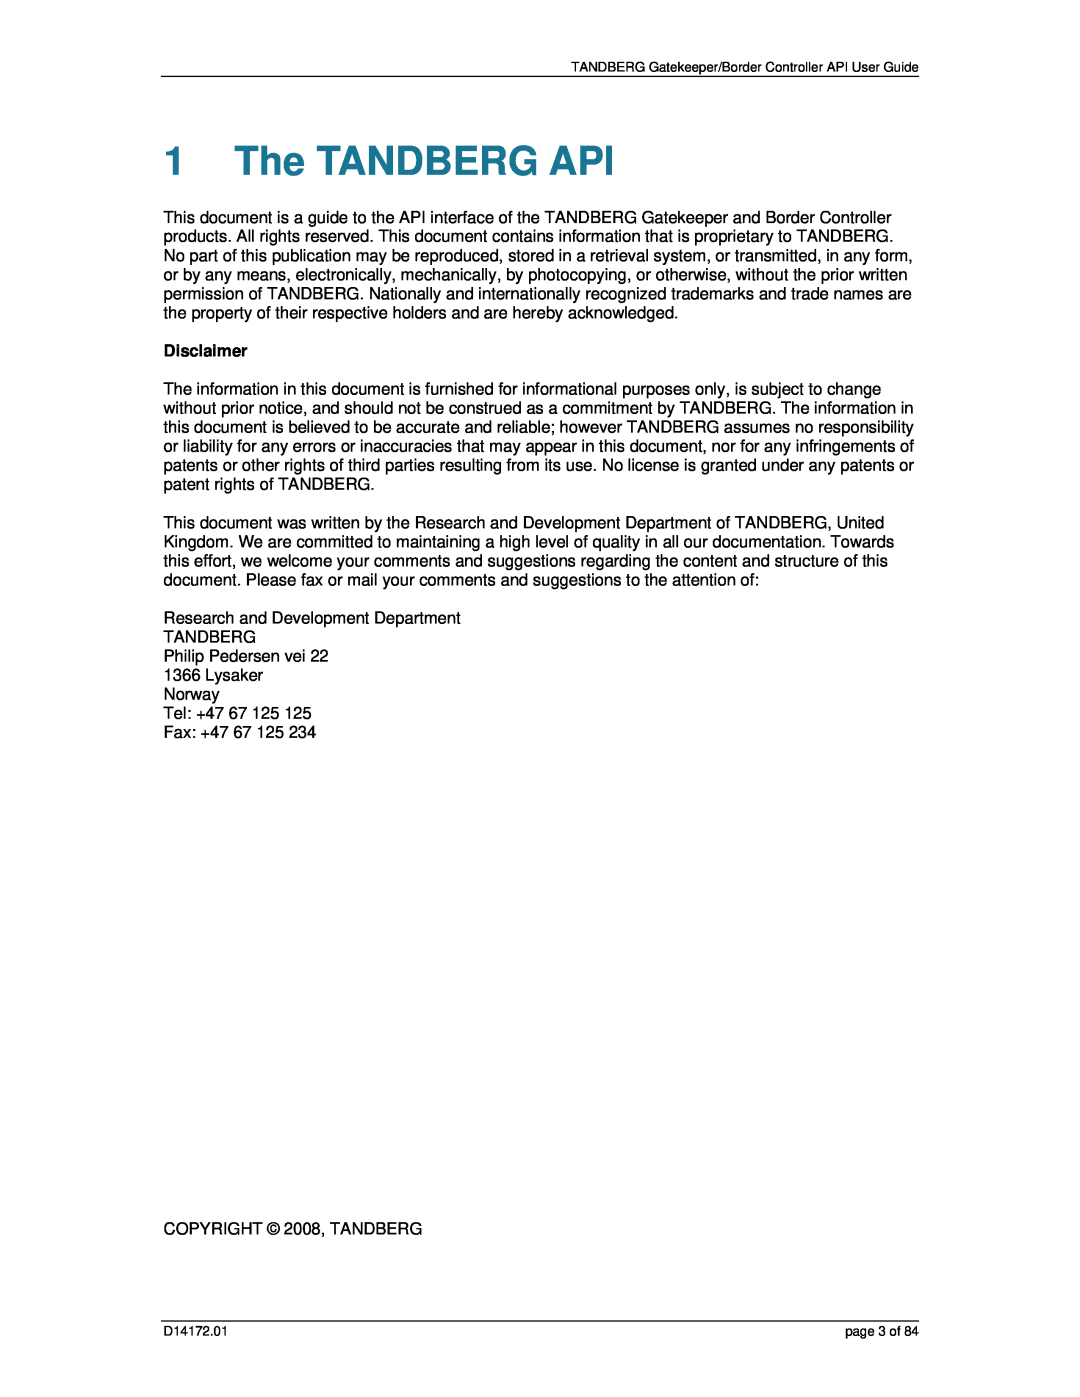 TANDBERG D14172.01 manual The TANDBERG API, Disclaimer 